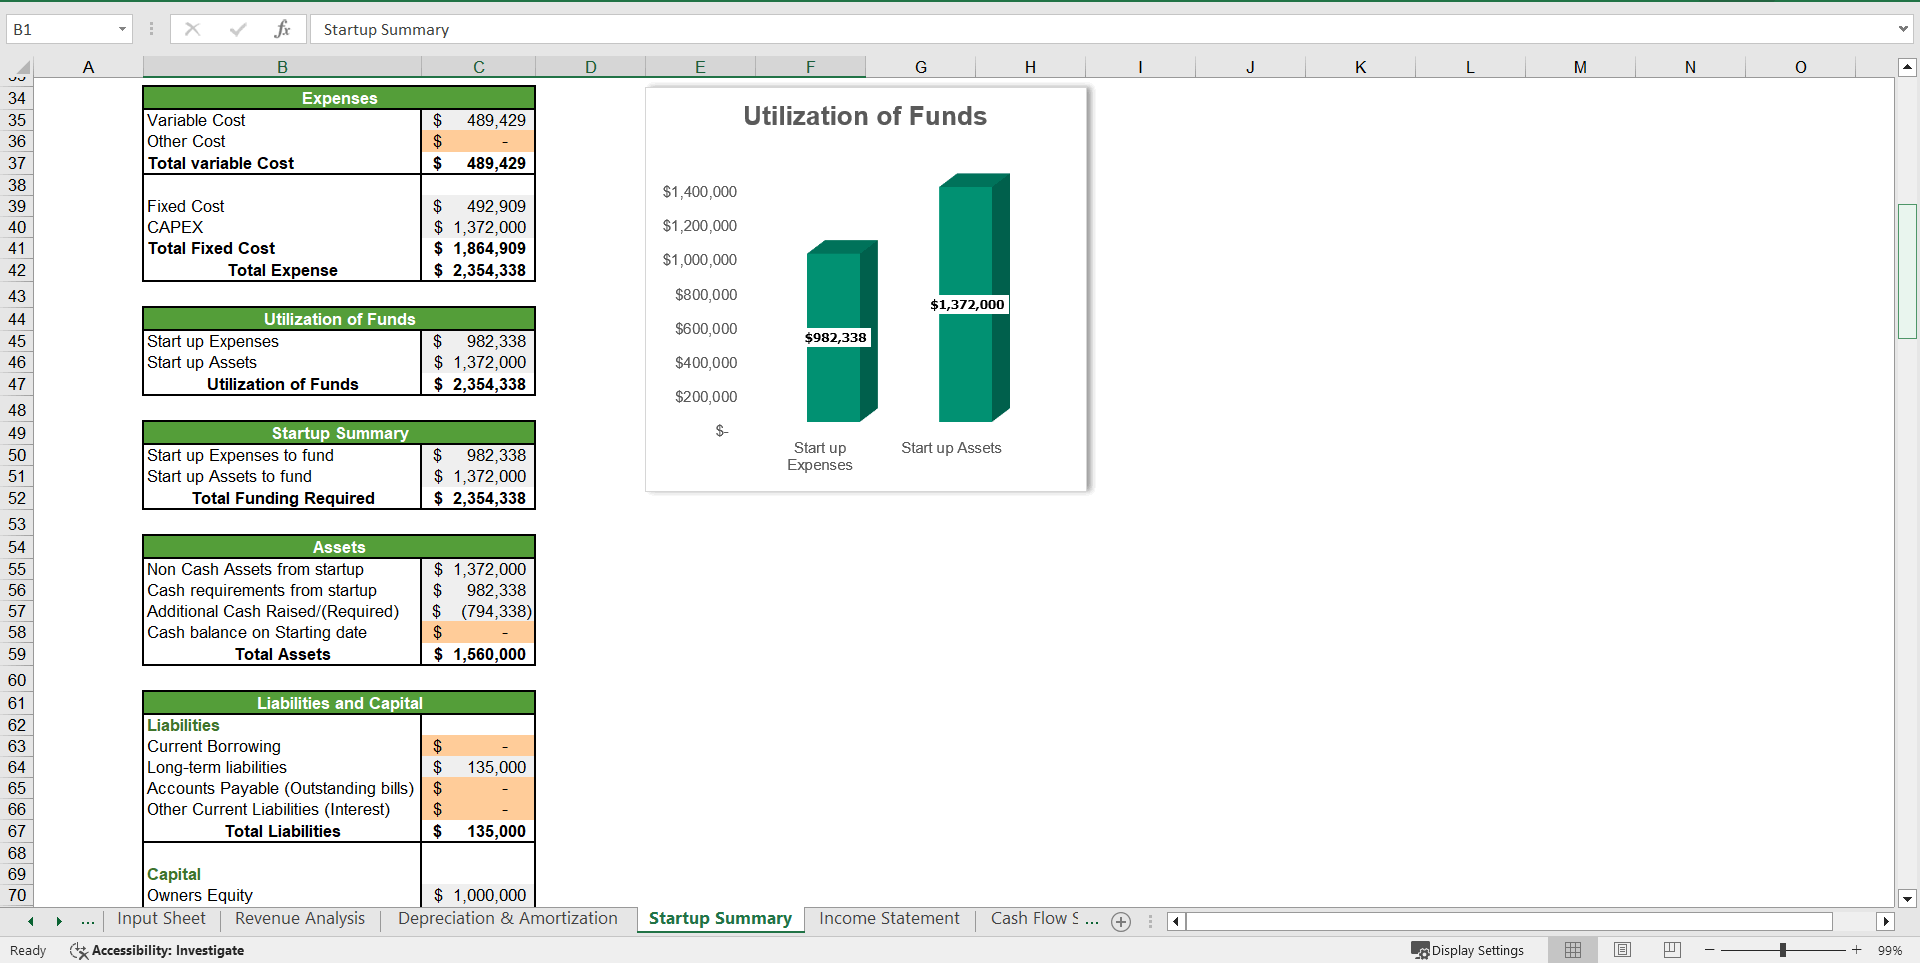 Logging Excel Financial Model (Excel template (XLSX)) Preview Image